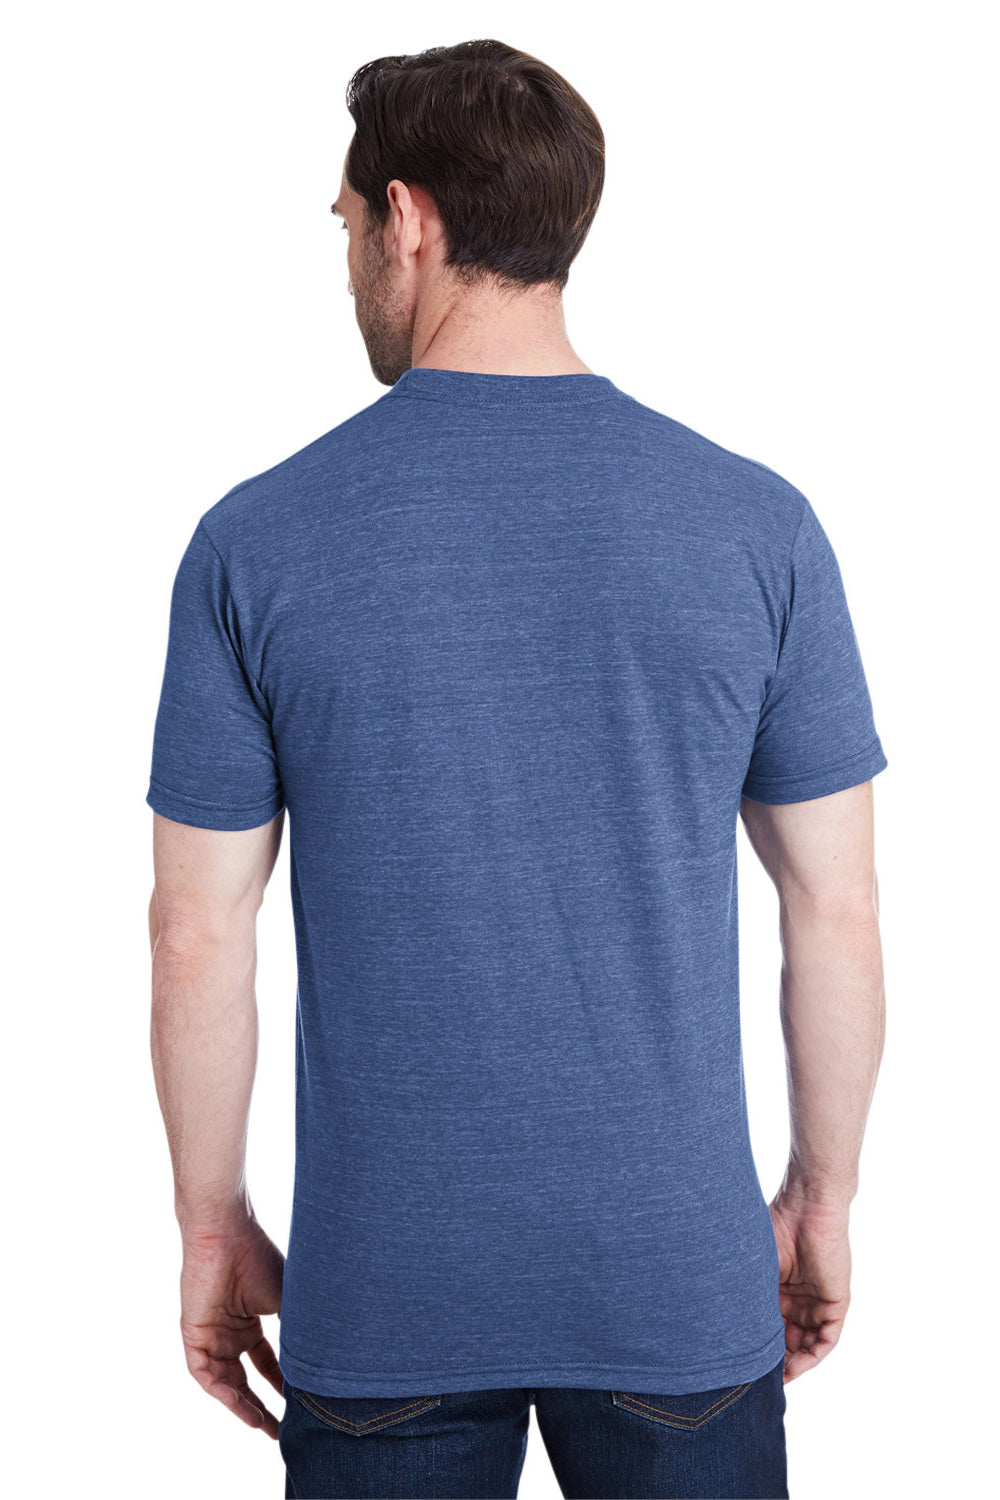 Bayside 5710 Mens USA Made Short Sleeve Crewneck T-Shirt Denim Blue Model Back